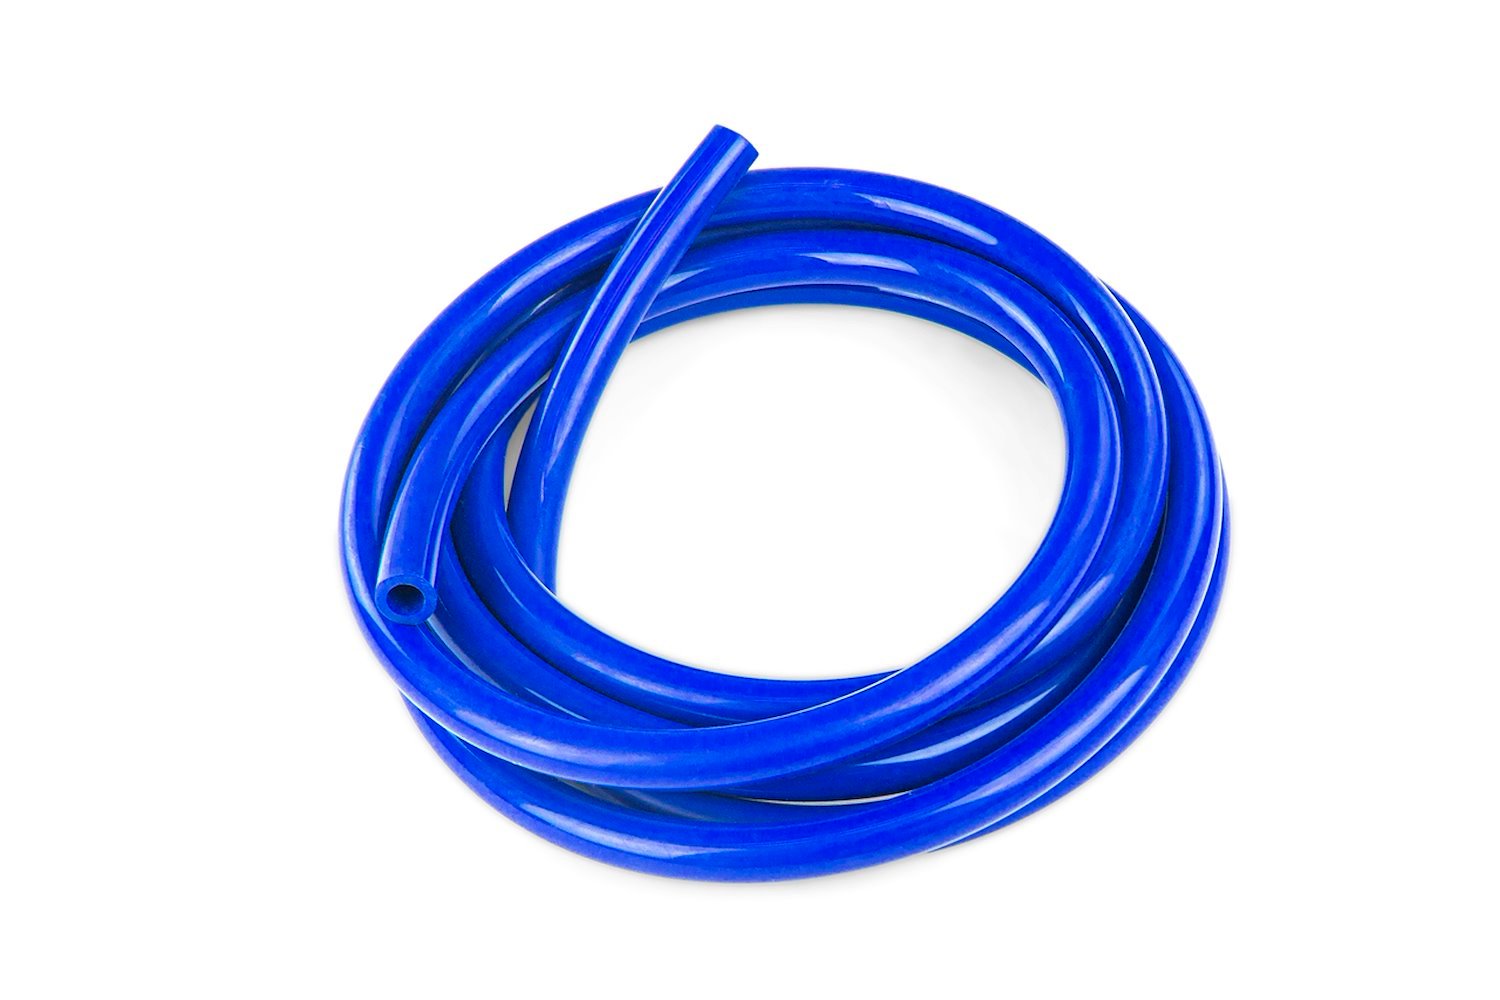 HTSVH3TW-BLUEx5 High-Temperature Silicone Vacuum Hose Tubing, 1/8 in. ID, 5 ft. Roll, Blue